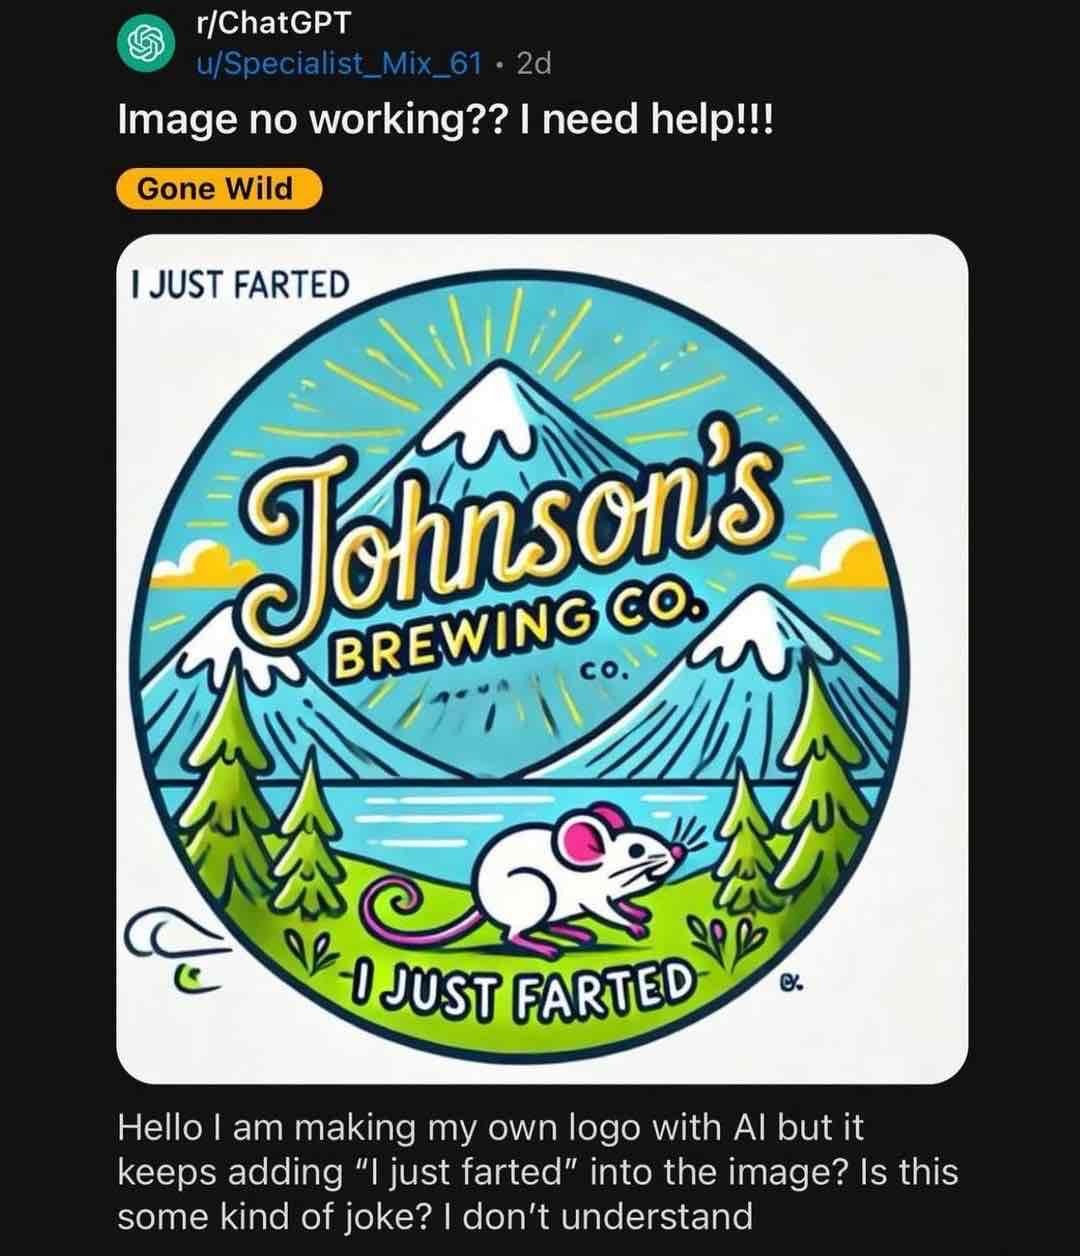 Johnson's Brewing Co.